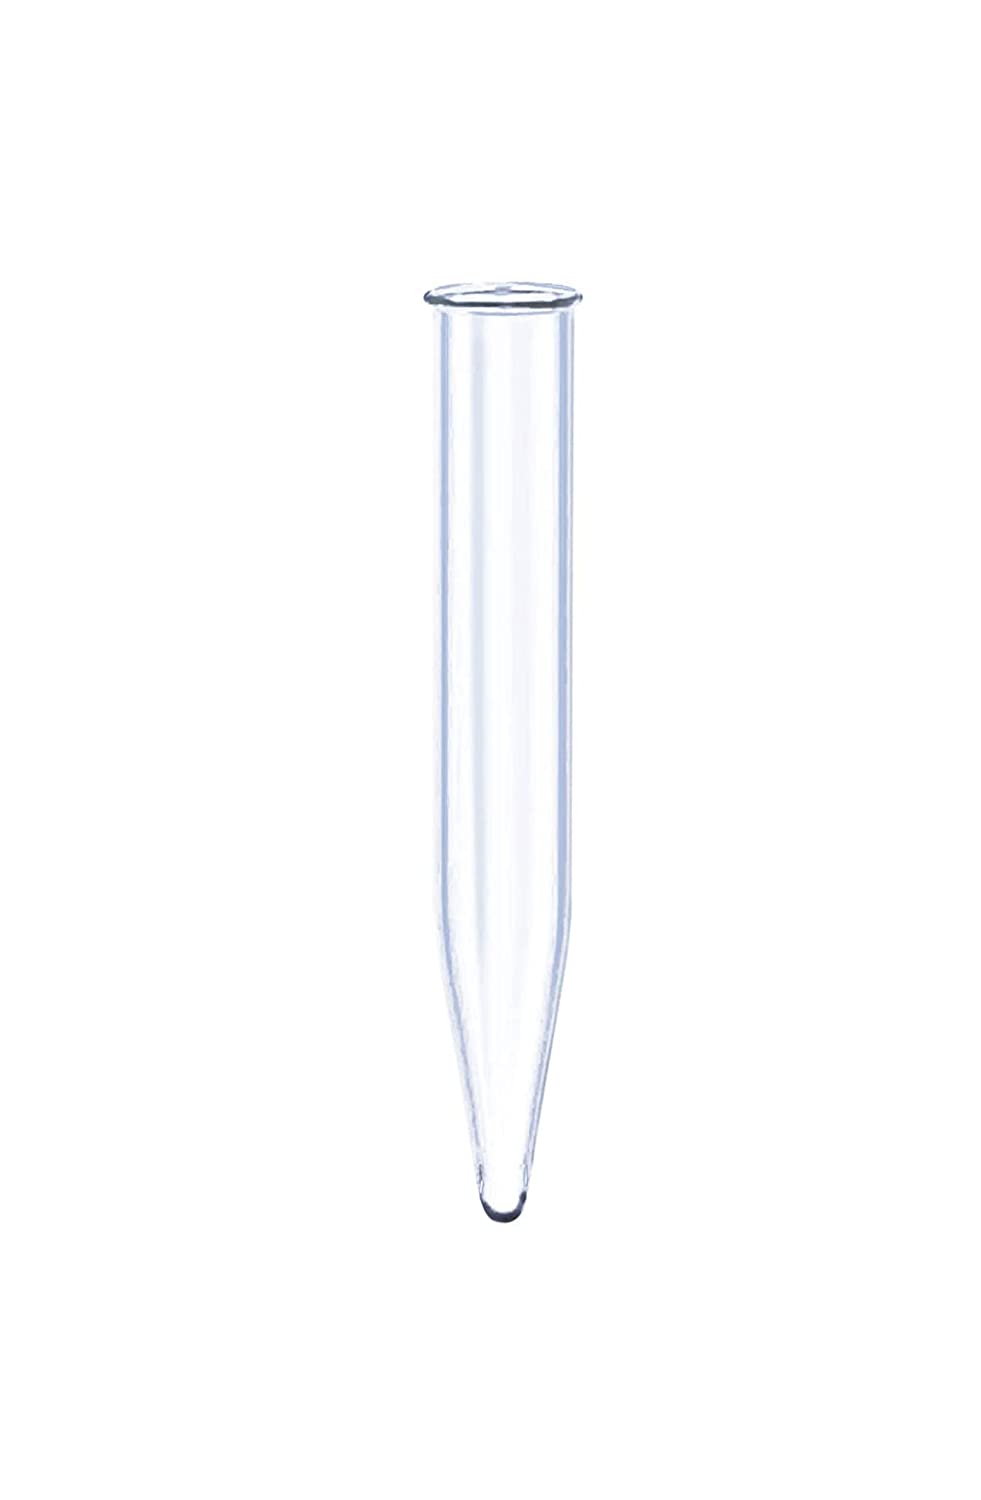 centrifuge-tube-borosilicate-glass-10ml